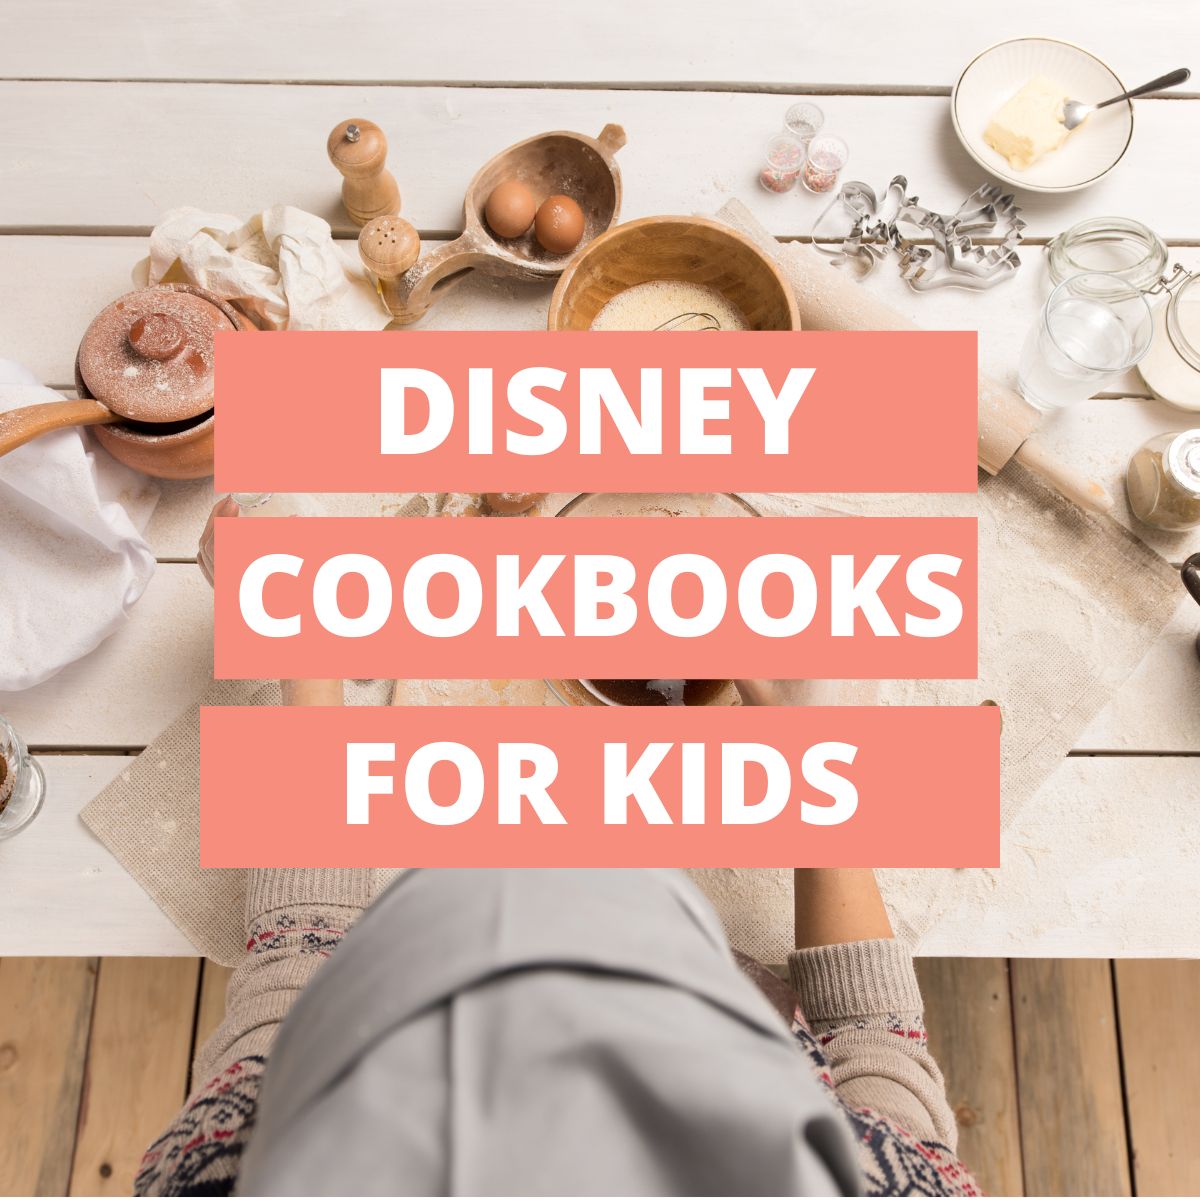 disney cookbooks for kids featured image